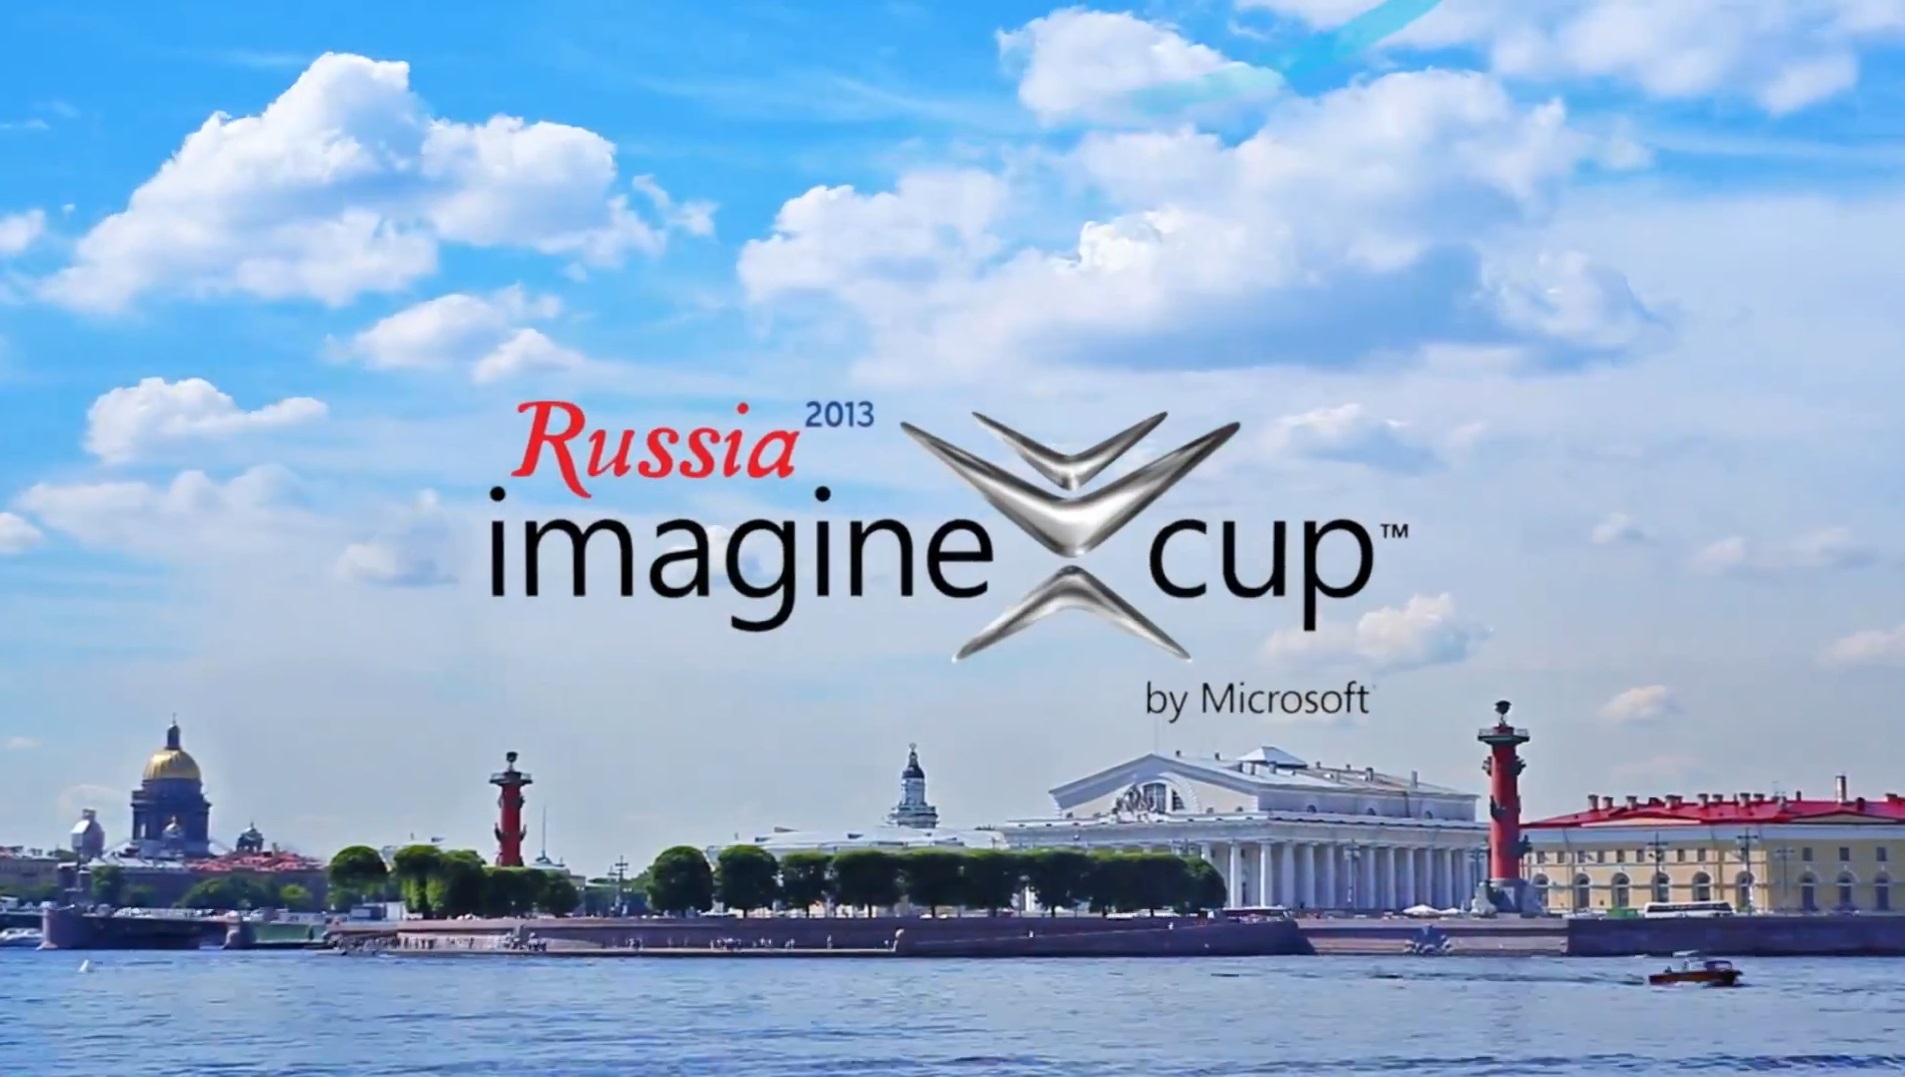 Imagine russian. Petersburg Cup 2013. Imagine Russia красота. Your Russia. Красота Imaginary Russia.